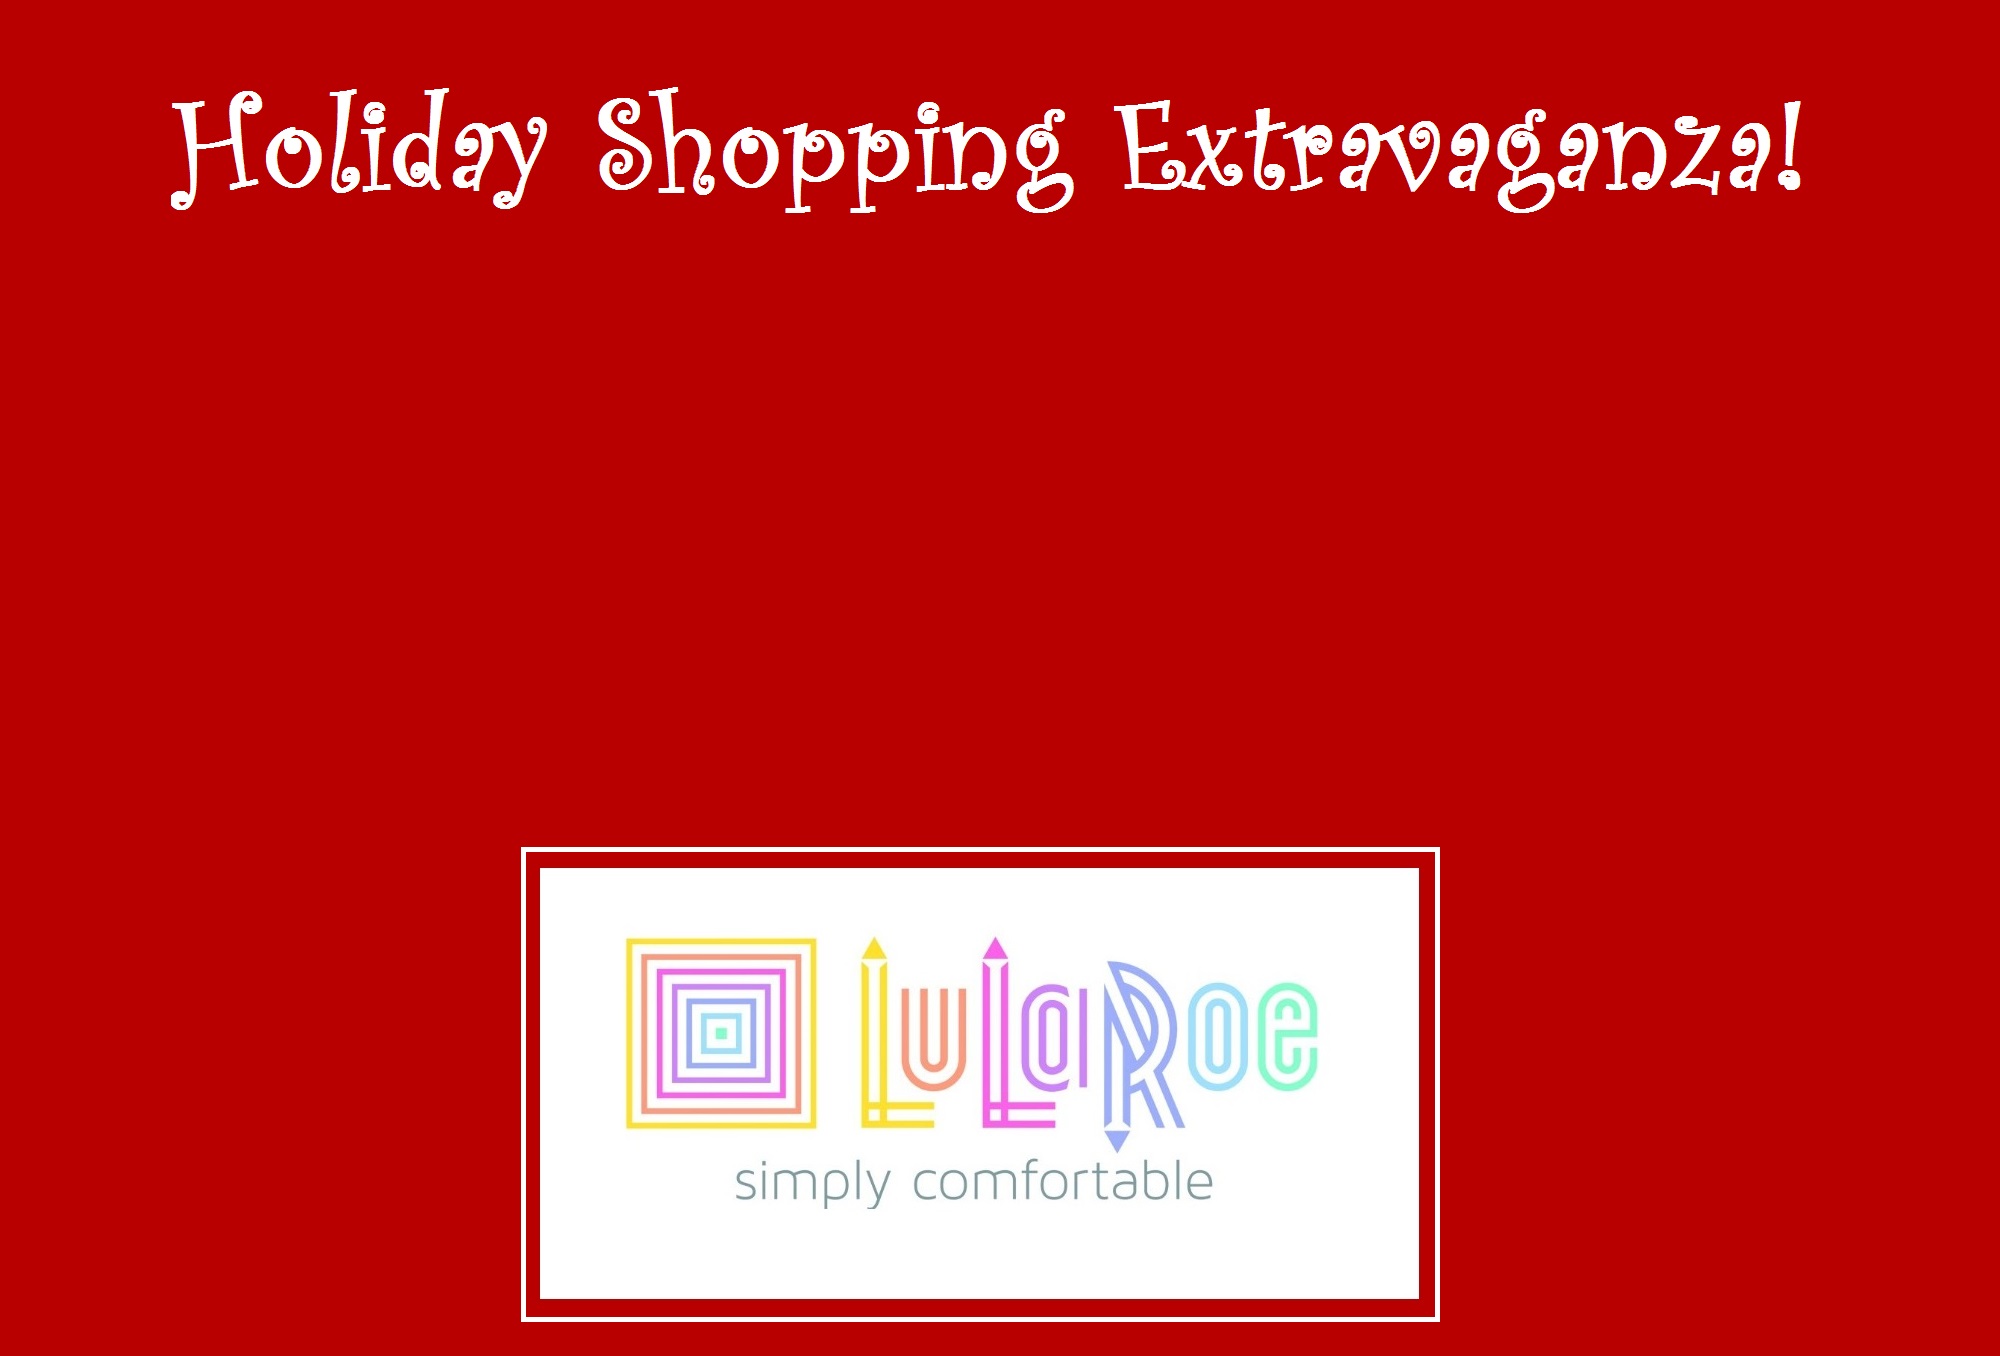 LuLaRoe Holiday Shopping Extravaganza